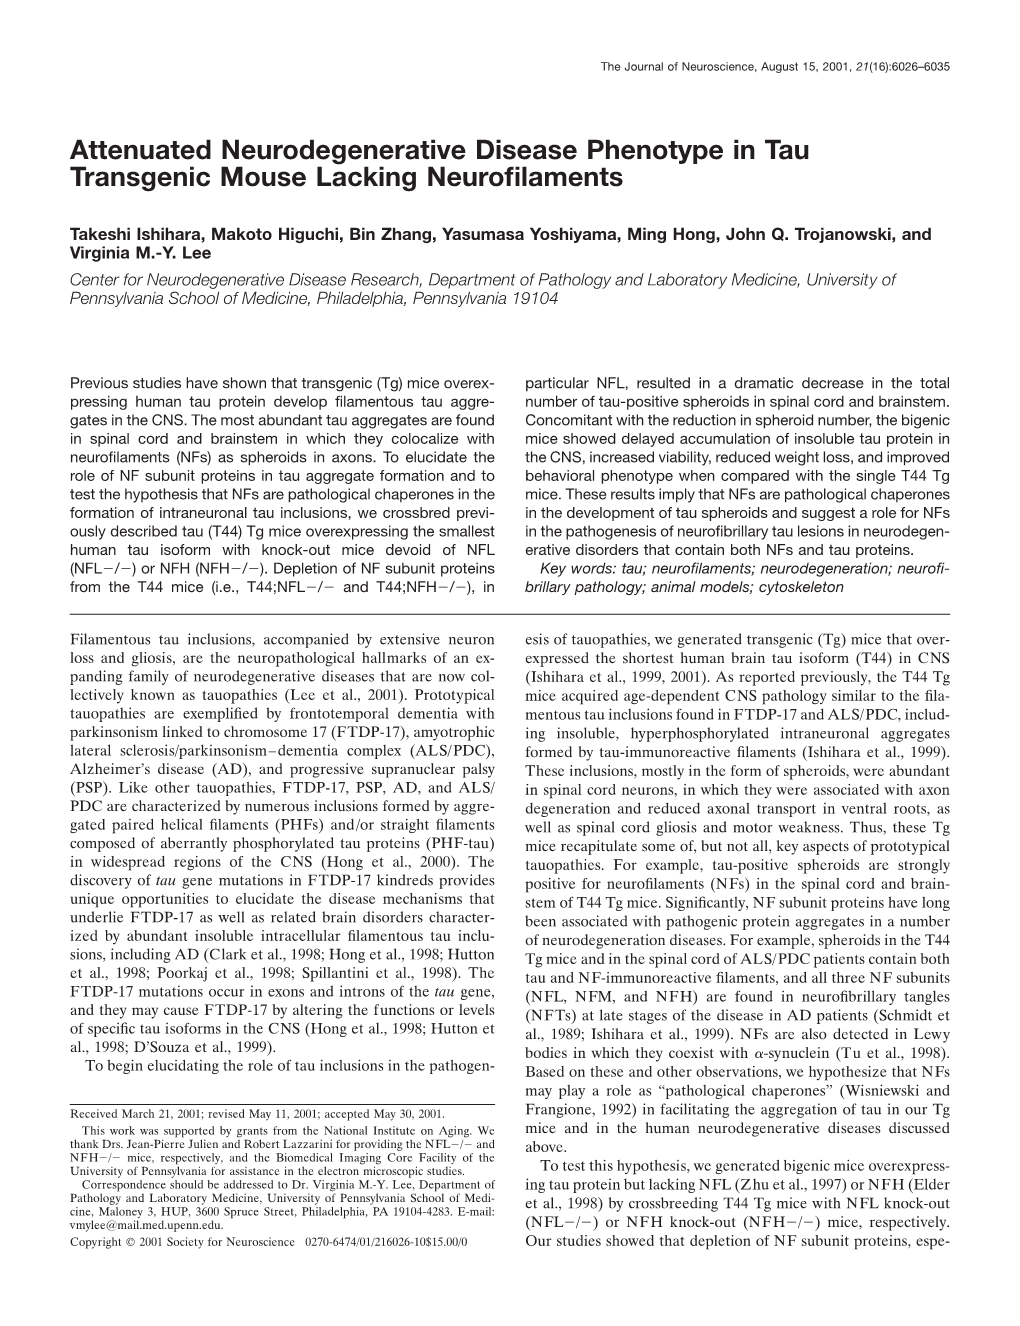 Attenuated Neurodegenerative Disease Phenotype in Tau Transgenic Mouse Lacking Neuroﬁlaments